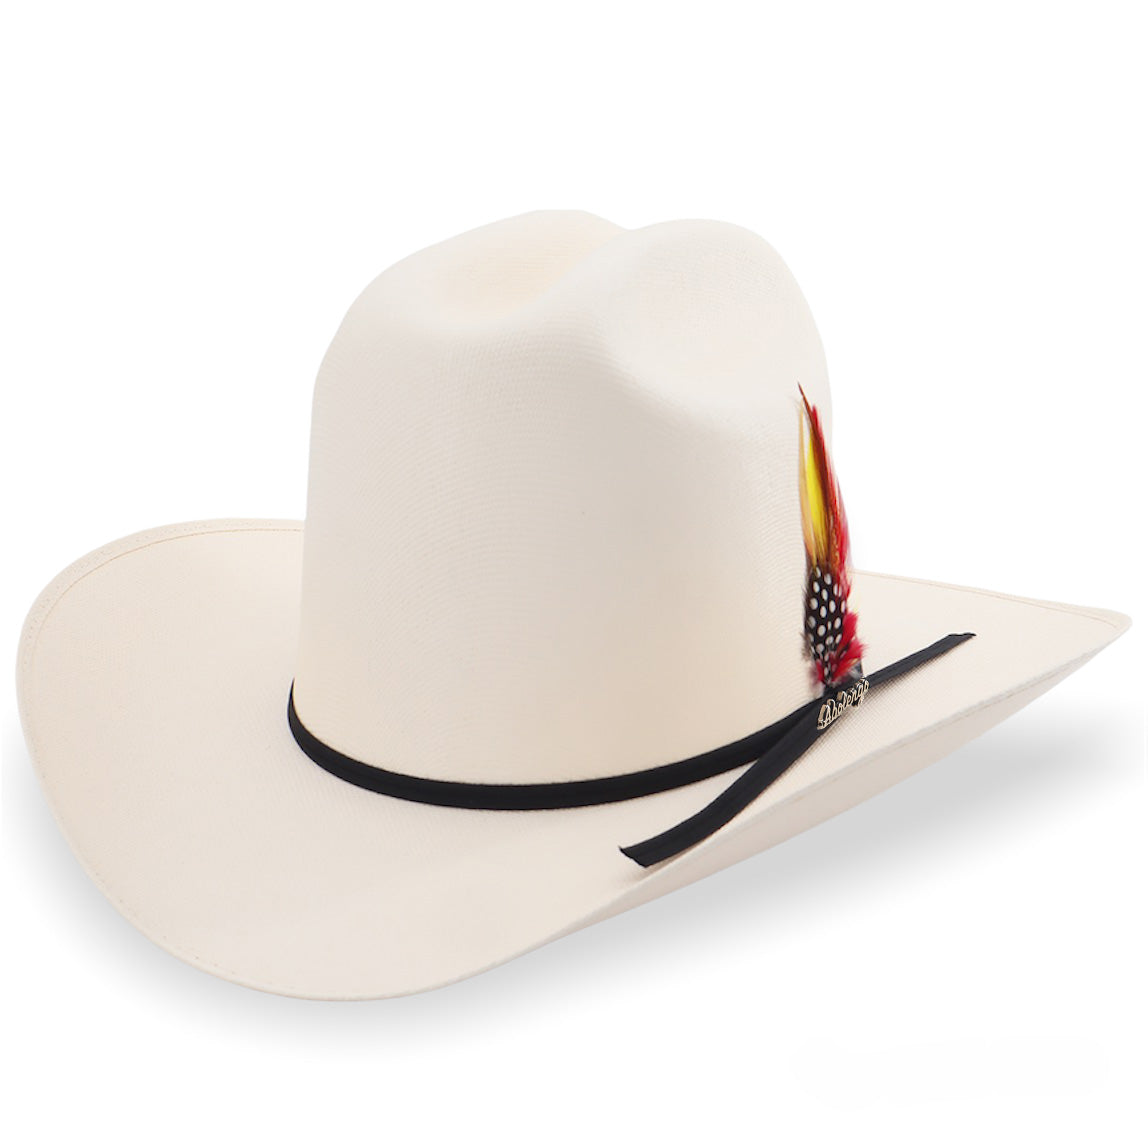 Abolengo 1000x Mexican Cowboy Hat